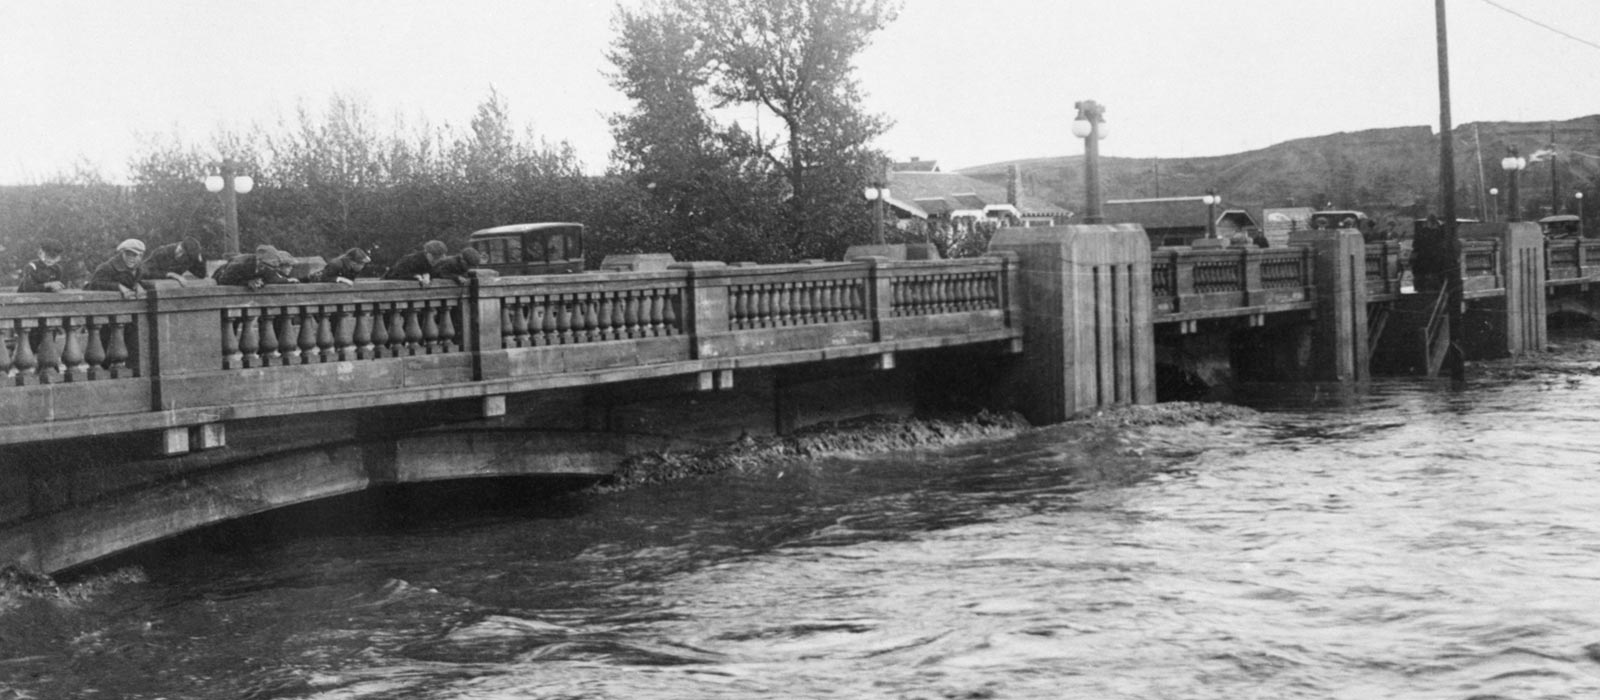 1923-BW-kids-on-bridge-1600.jpg